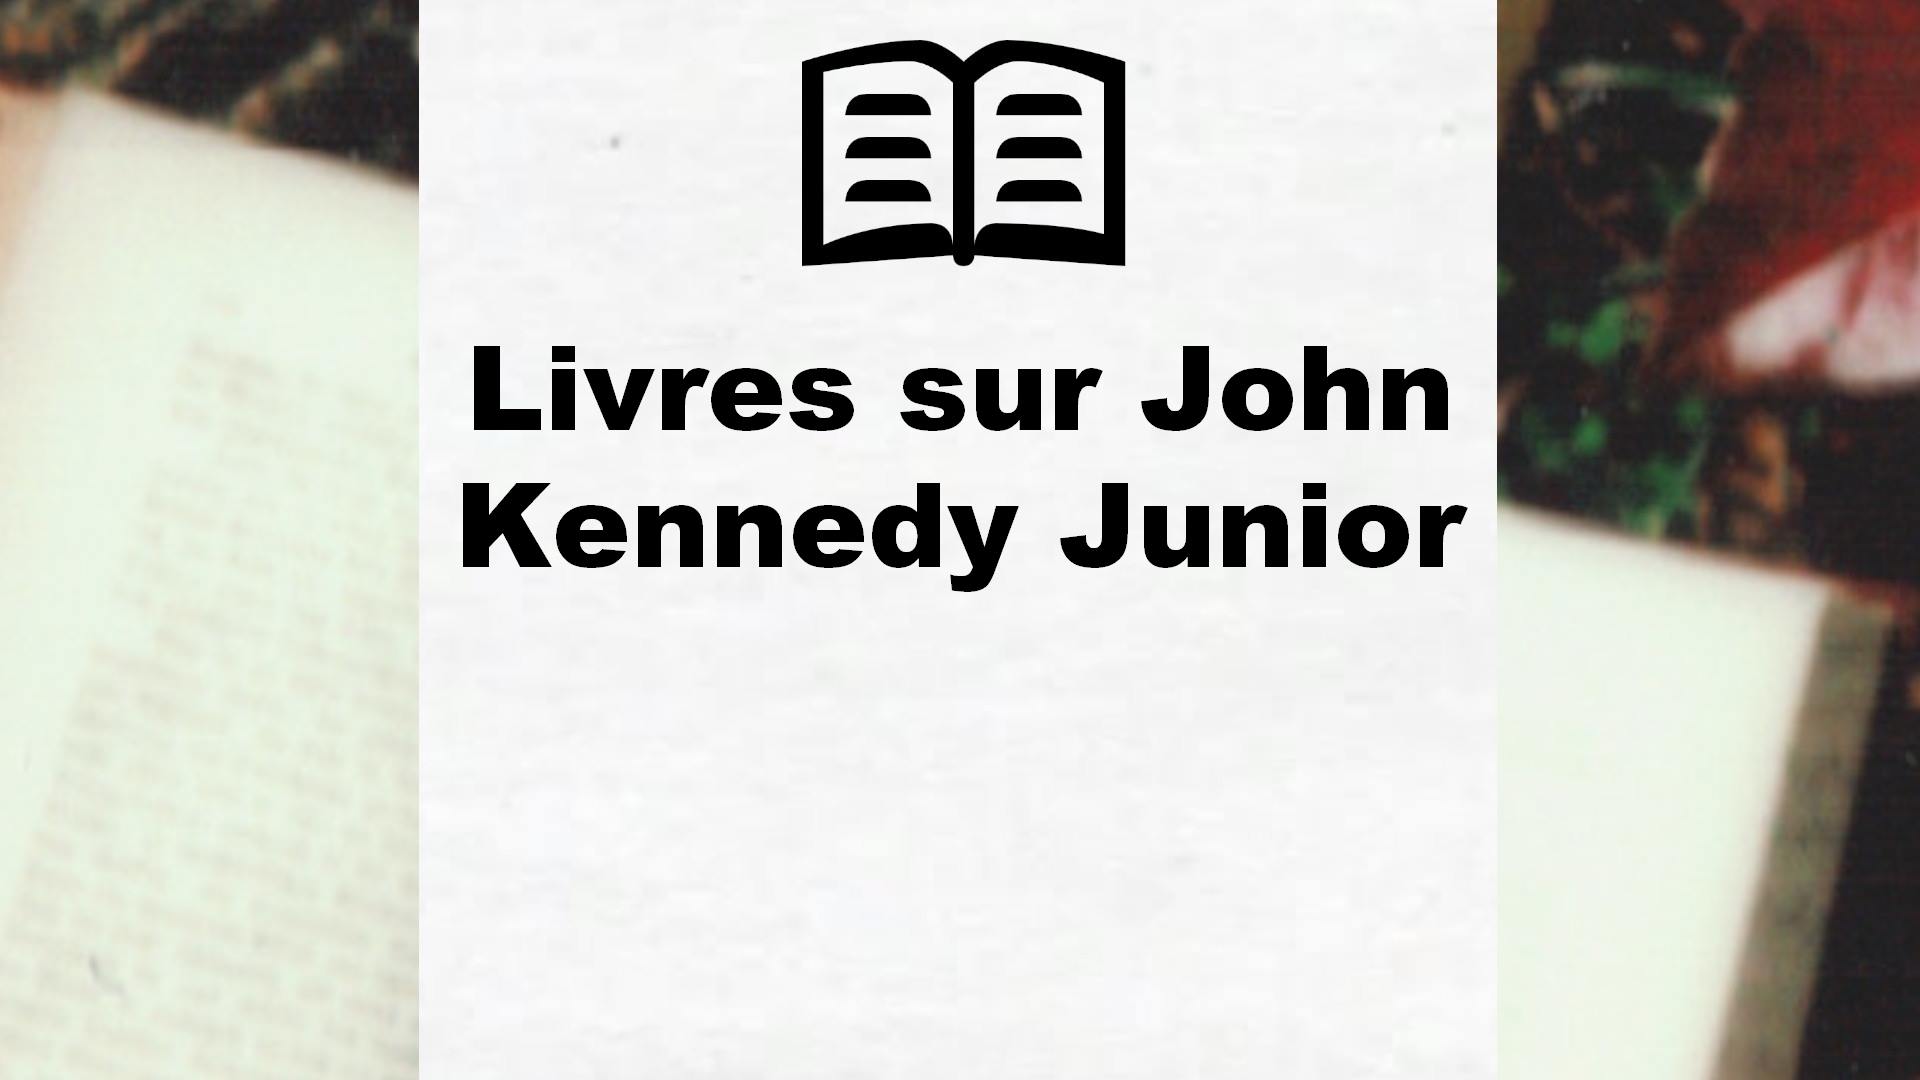 Livres sur John Kennedy Junior